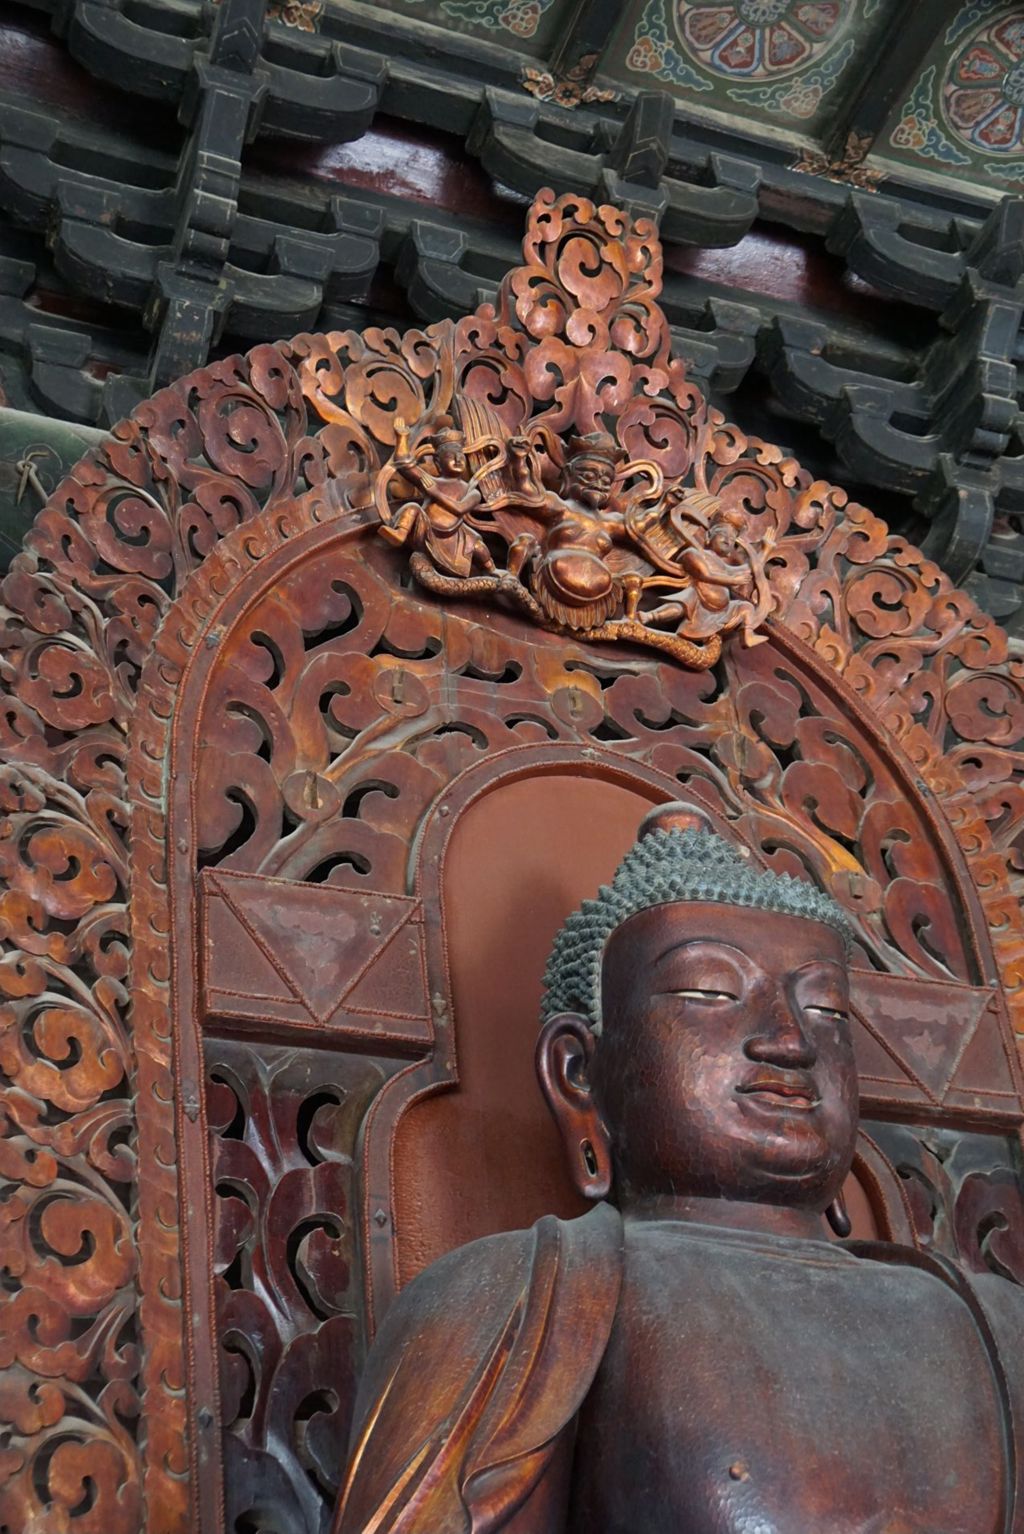 Miniature of Dazhi Hall (Dazhidian, Hall of Great Wisdom), seated bodhisattva